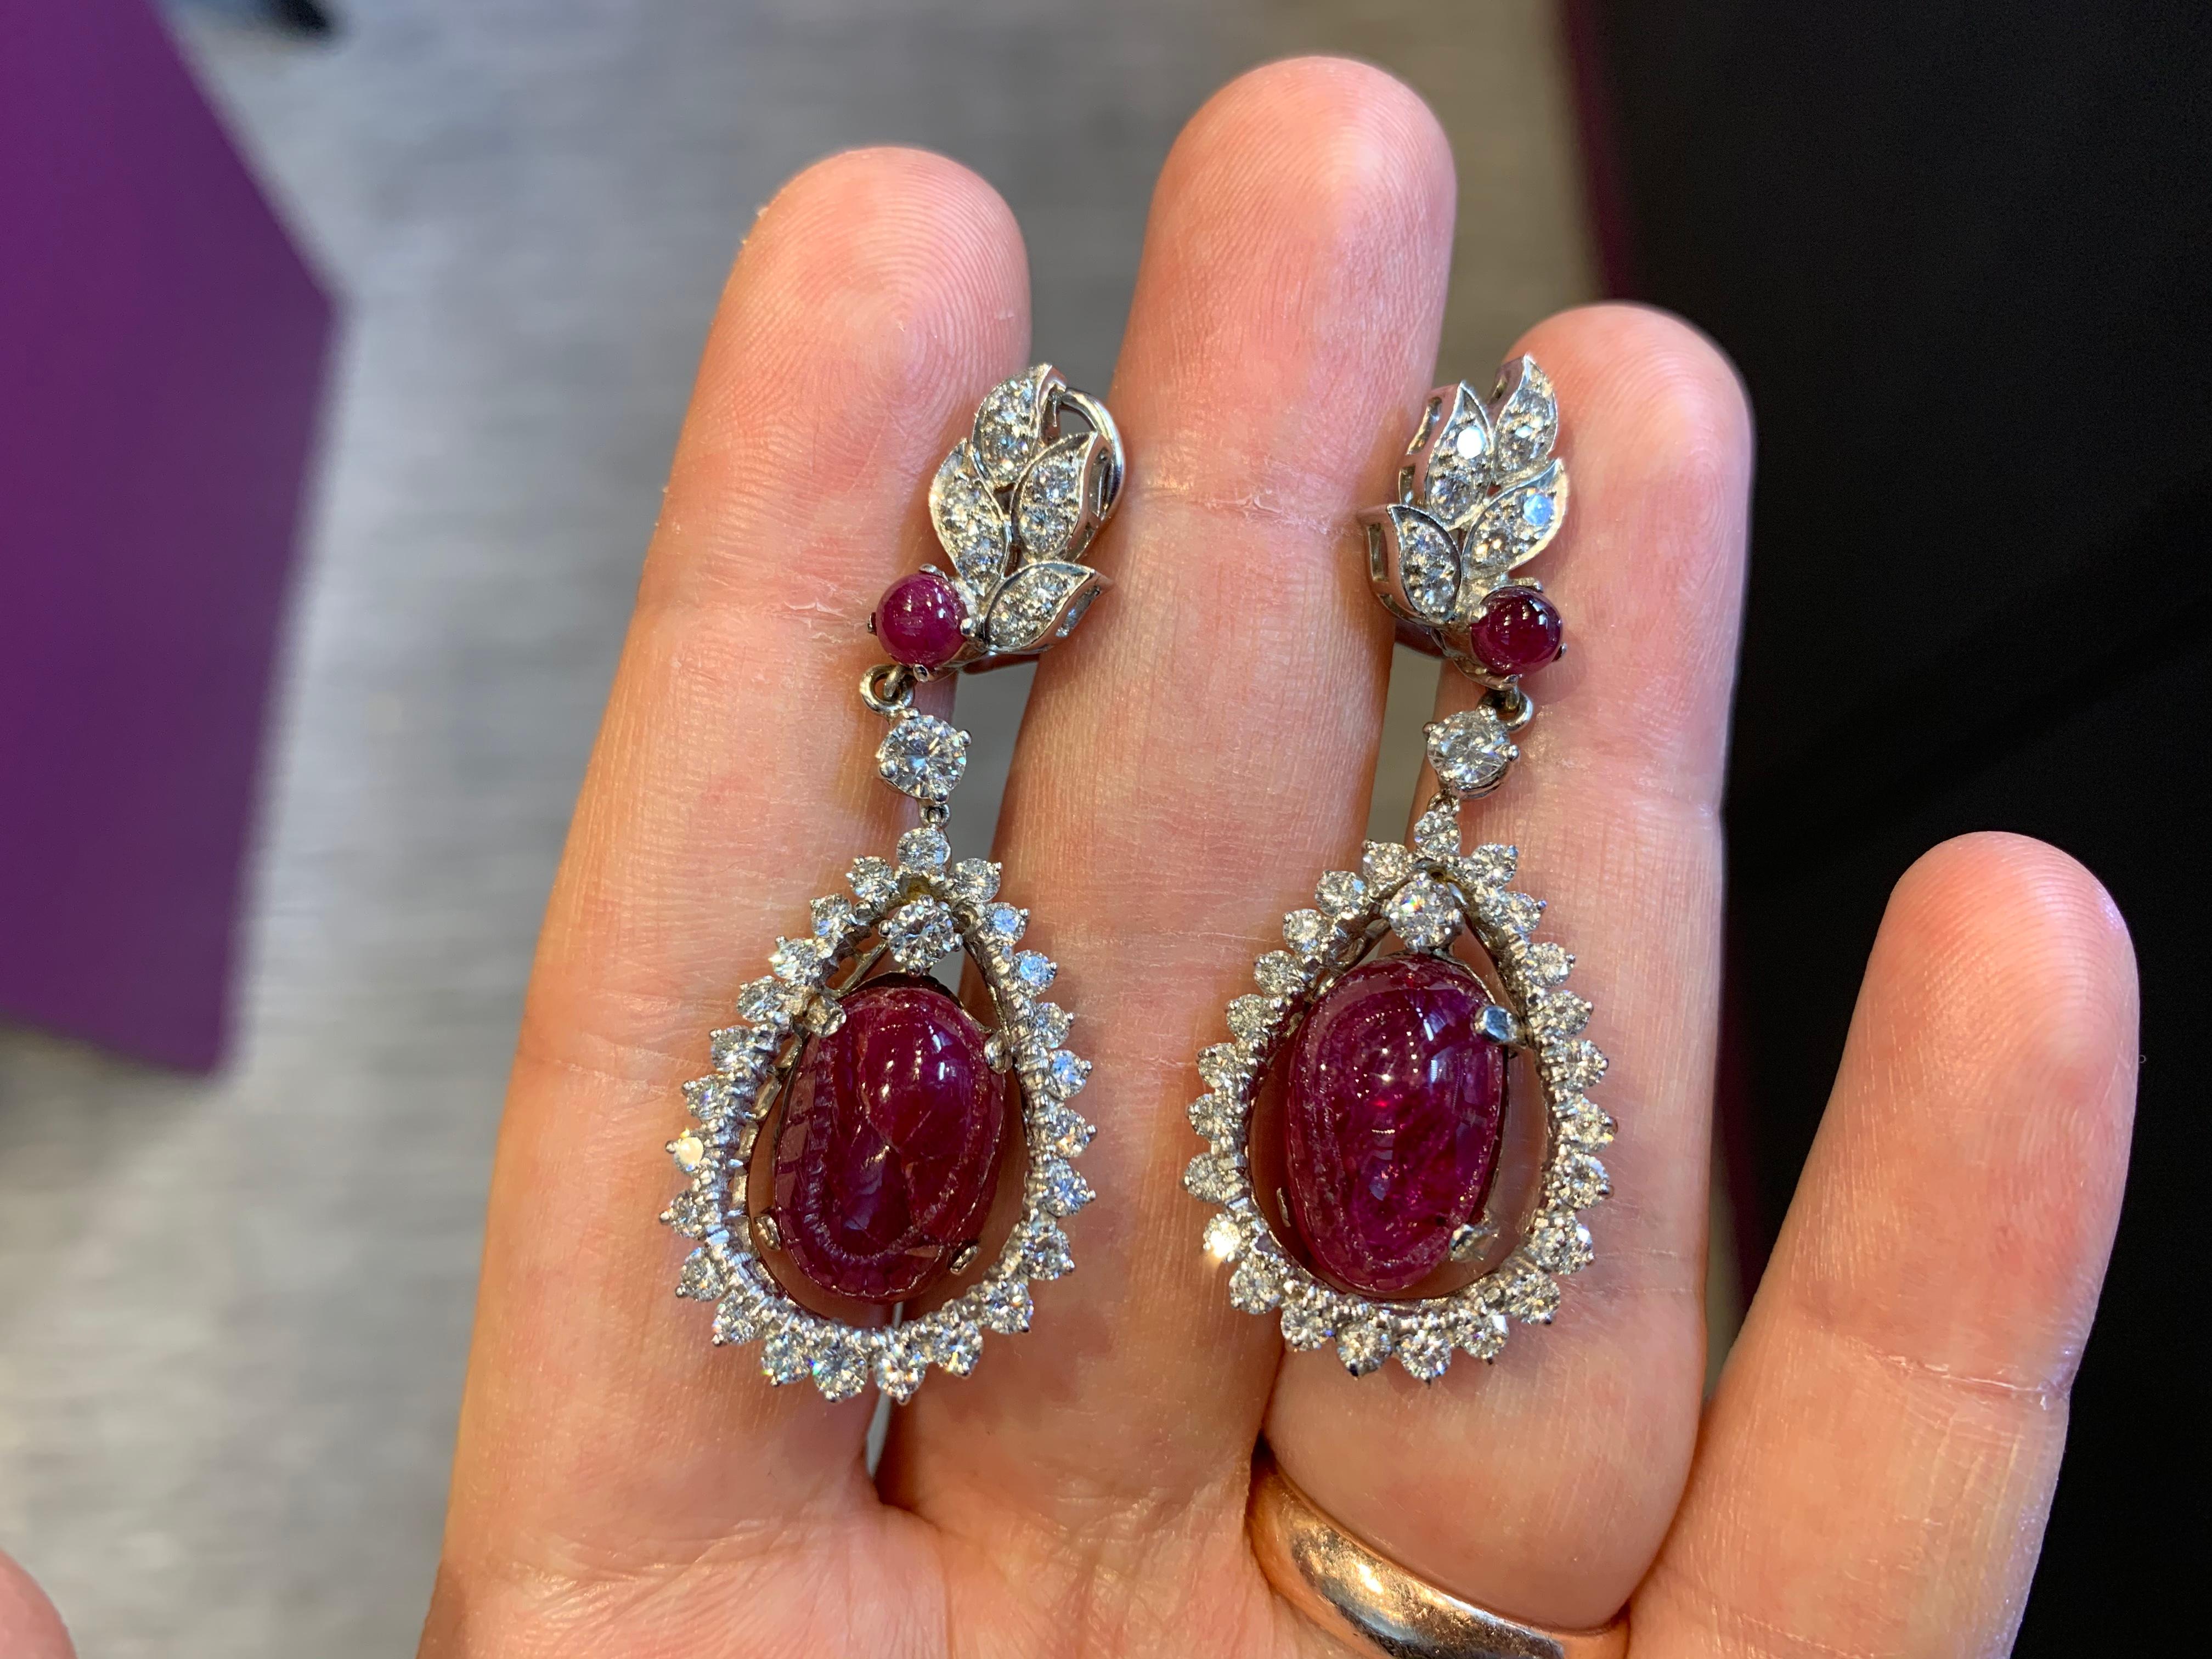 Ruby & Diamond Dangle Drop Earrings
68 round cut diamonds
4 cabochon rubies
Measurements:  1.75